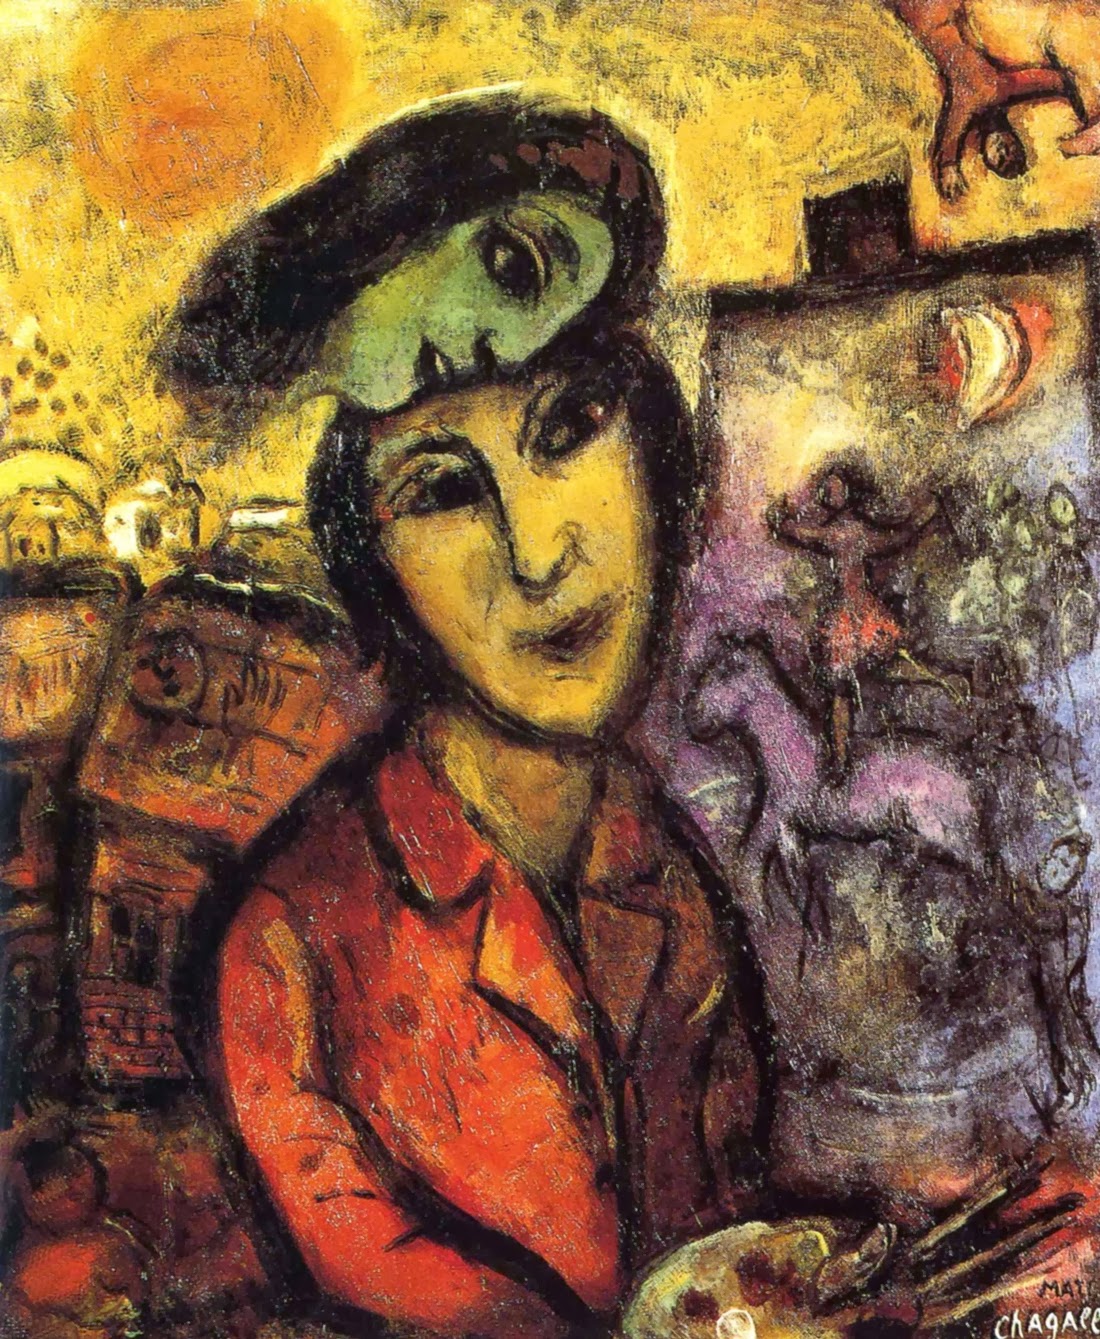 Marc+Chagall-1887-1985 (149).jpg